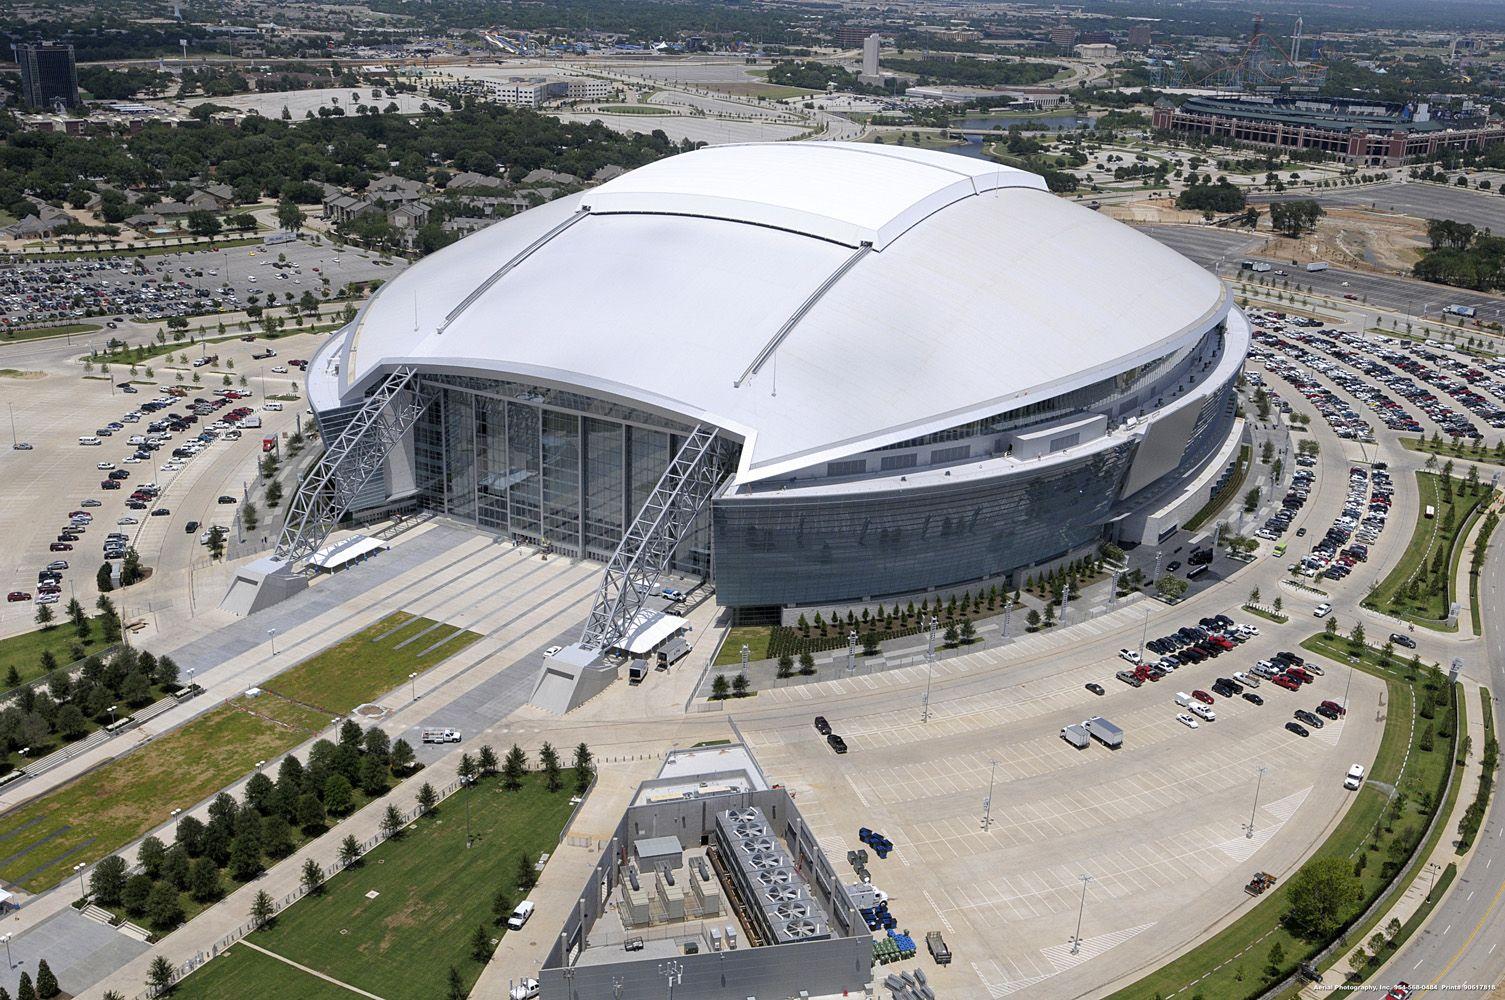 1000x665px Cowboys Stadium (1083.91 KB).05.2015